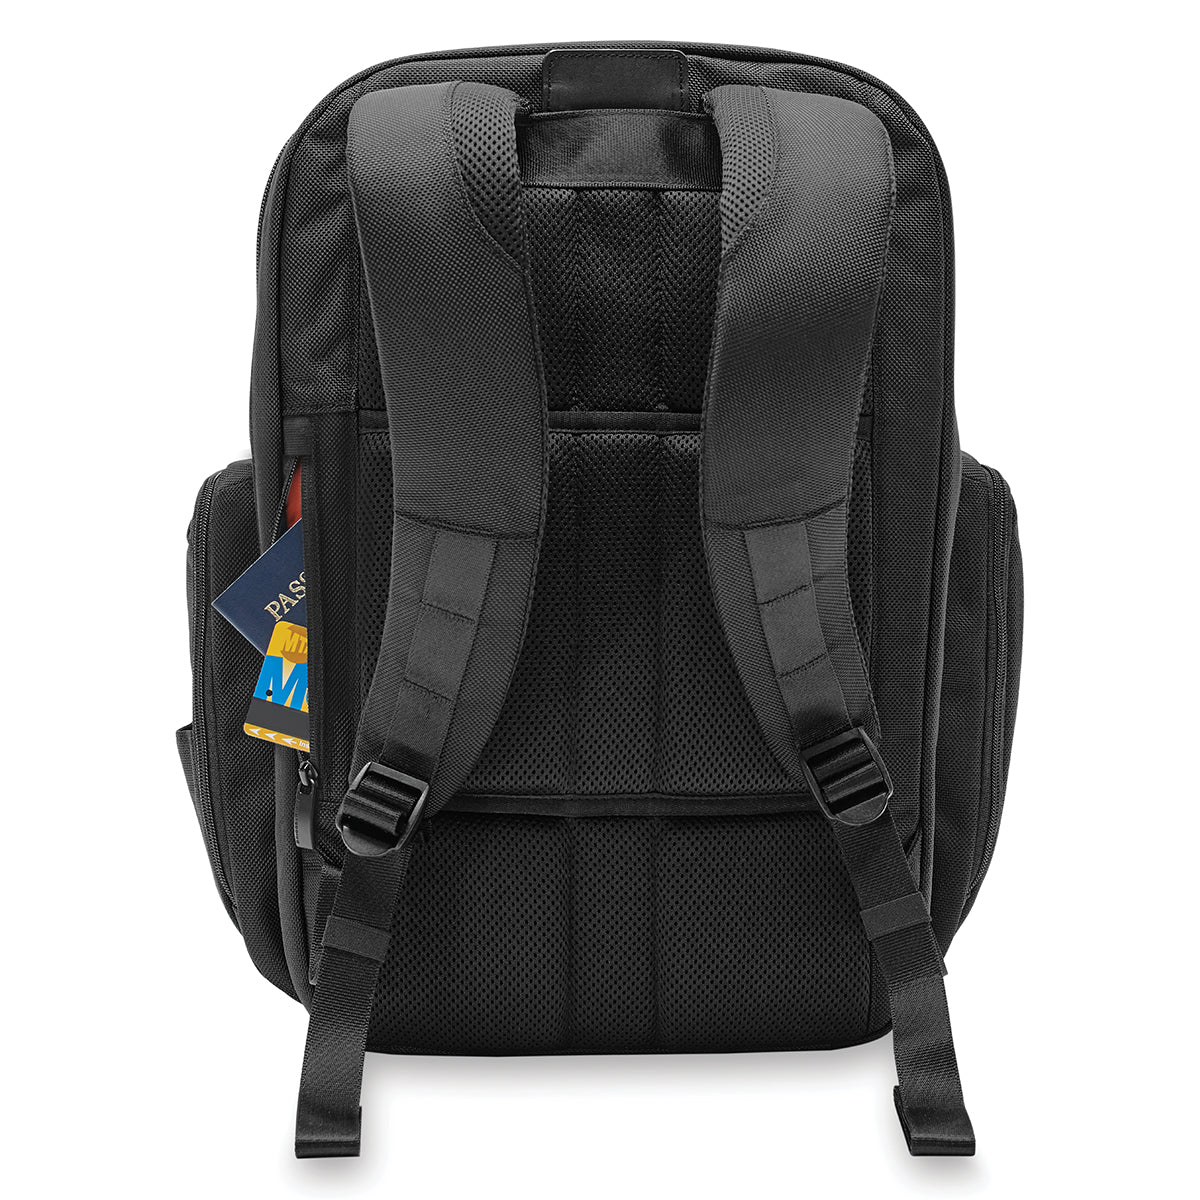 Briggs & Riley Baseline Traveler Backpack